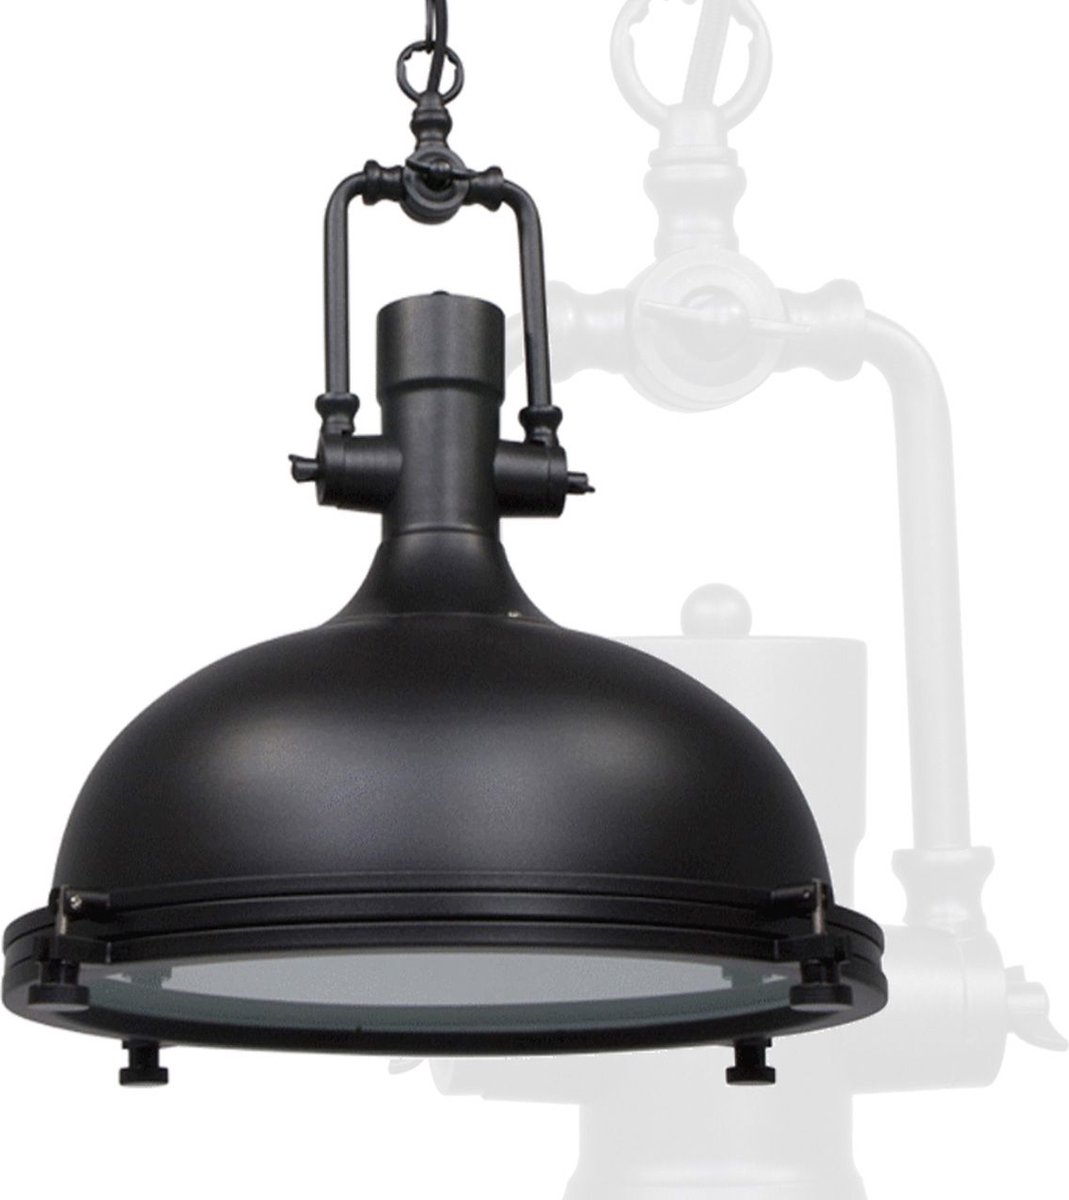 Zwarte industriële hanglamp Eliga | 1 lichts | glas / metaal | ⌀ 40 cm | tot 155 cm in hoogte verstelbaar | eetkamer / woonkamer lamp | landelijk / modern / robuust design